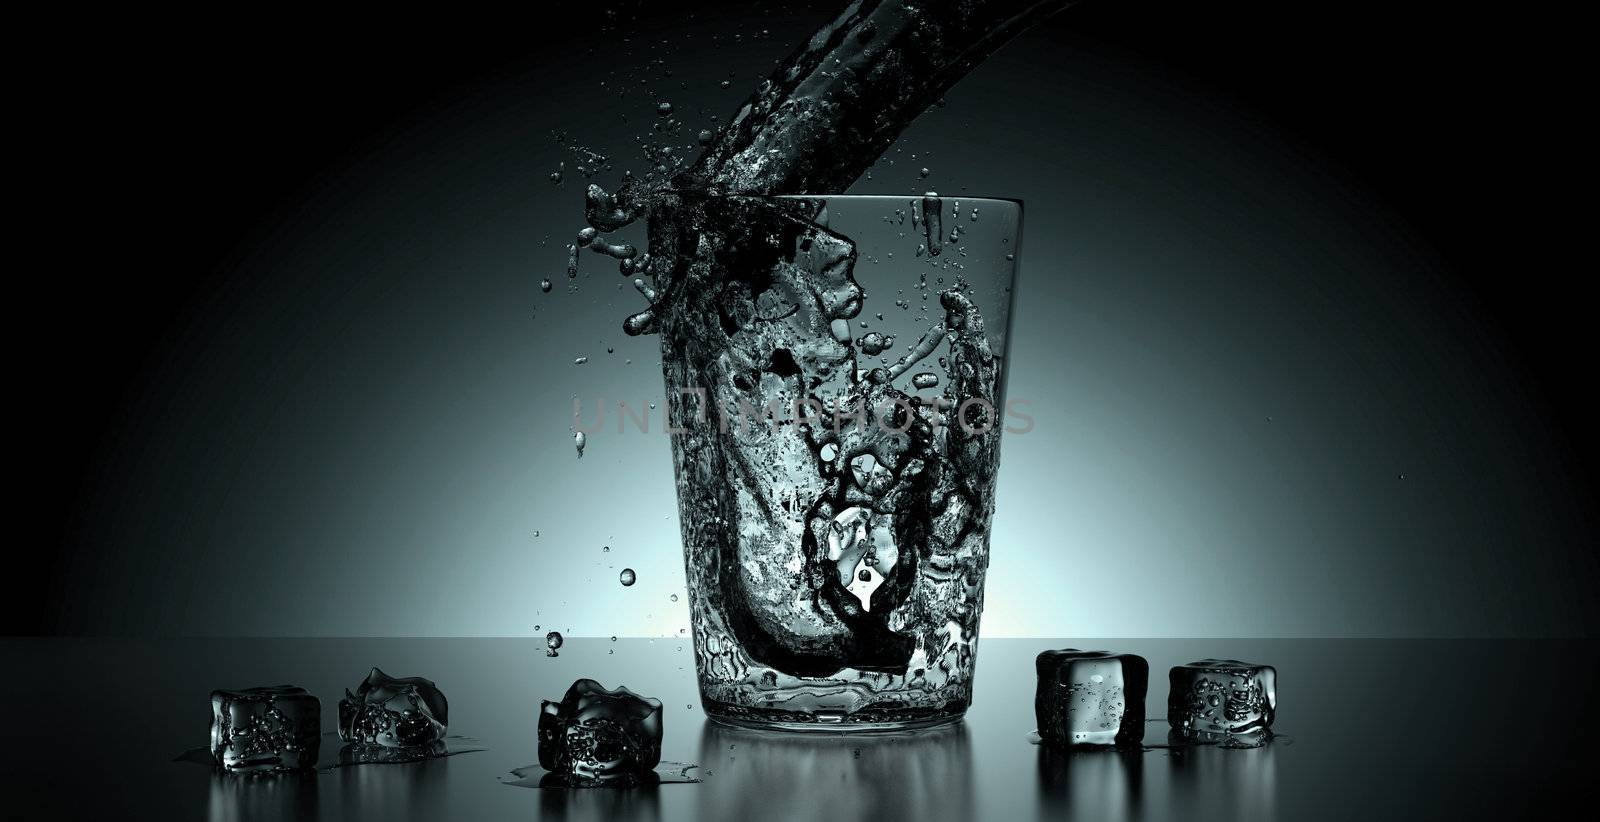 Image of water splashing inside of a glass.